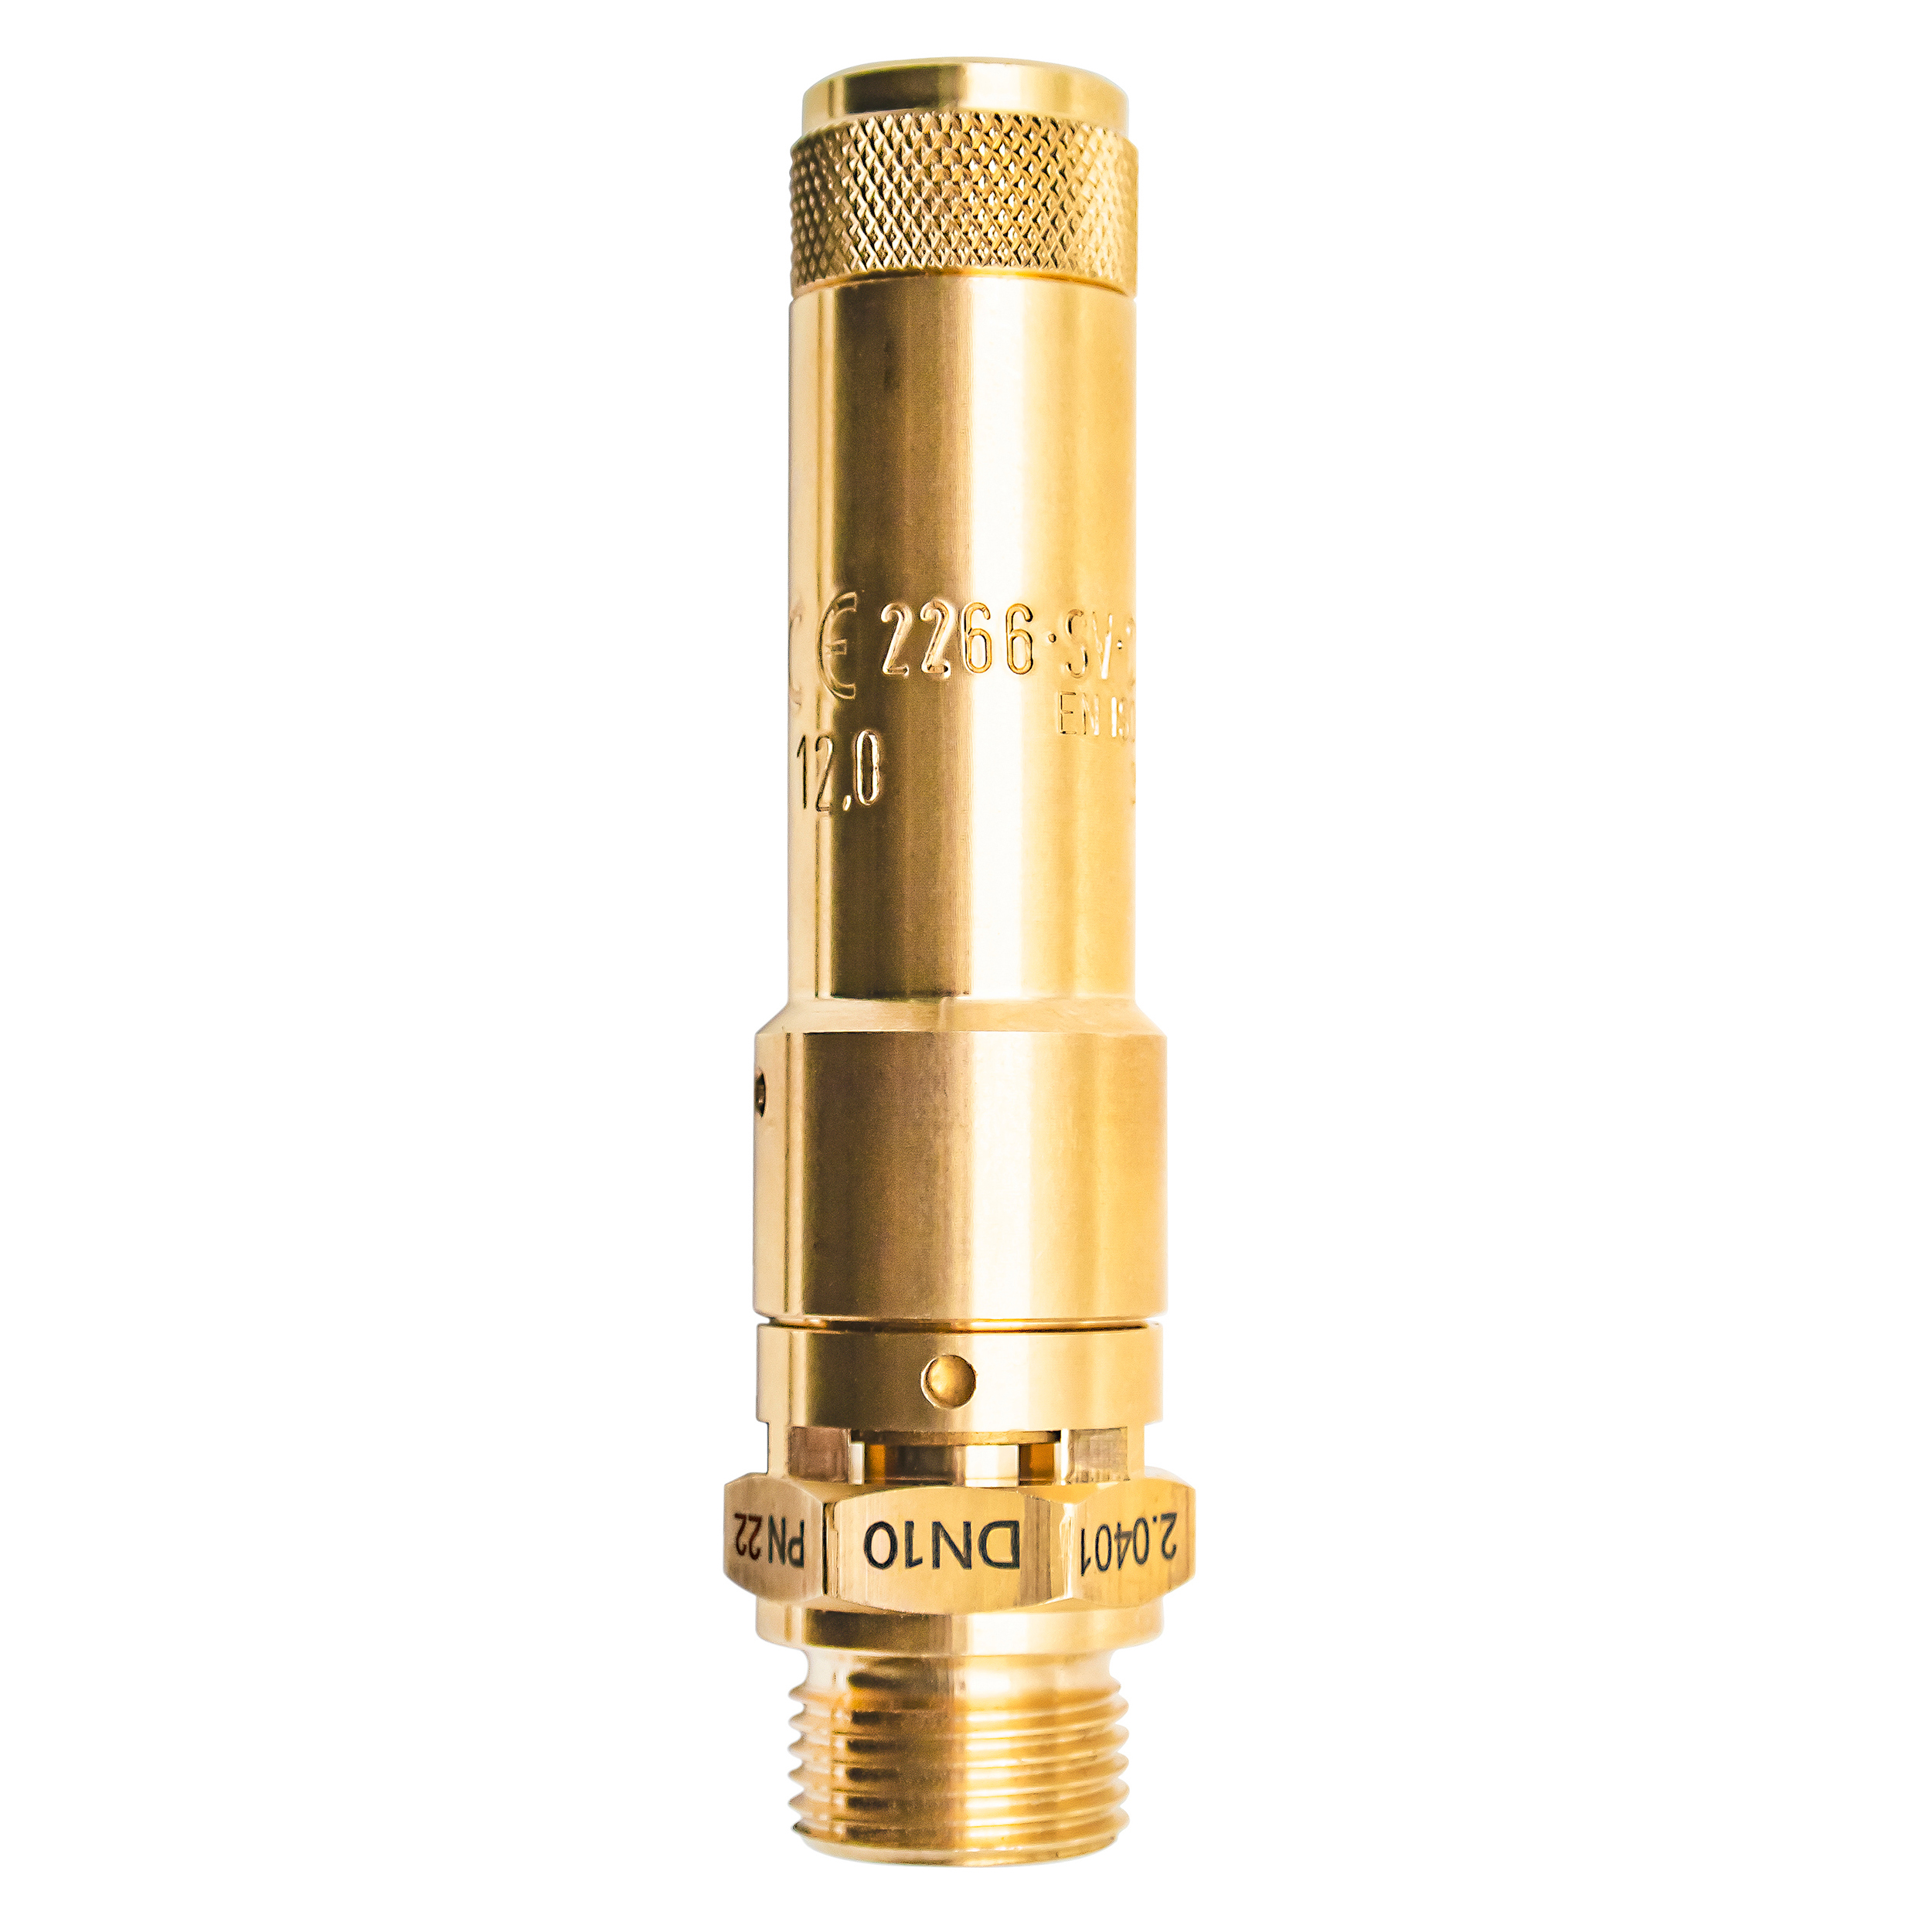 Savety valve component tested DN 10, G½, set pressure: 21.8 bar (316,1 psi)